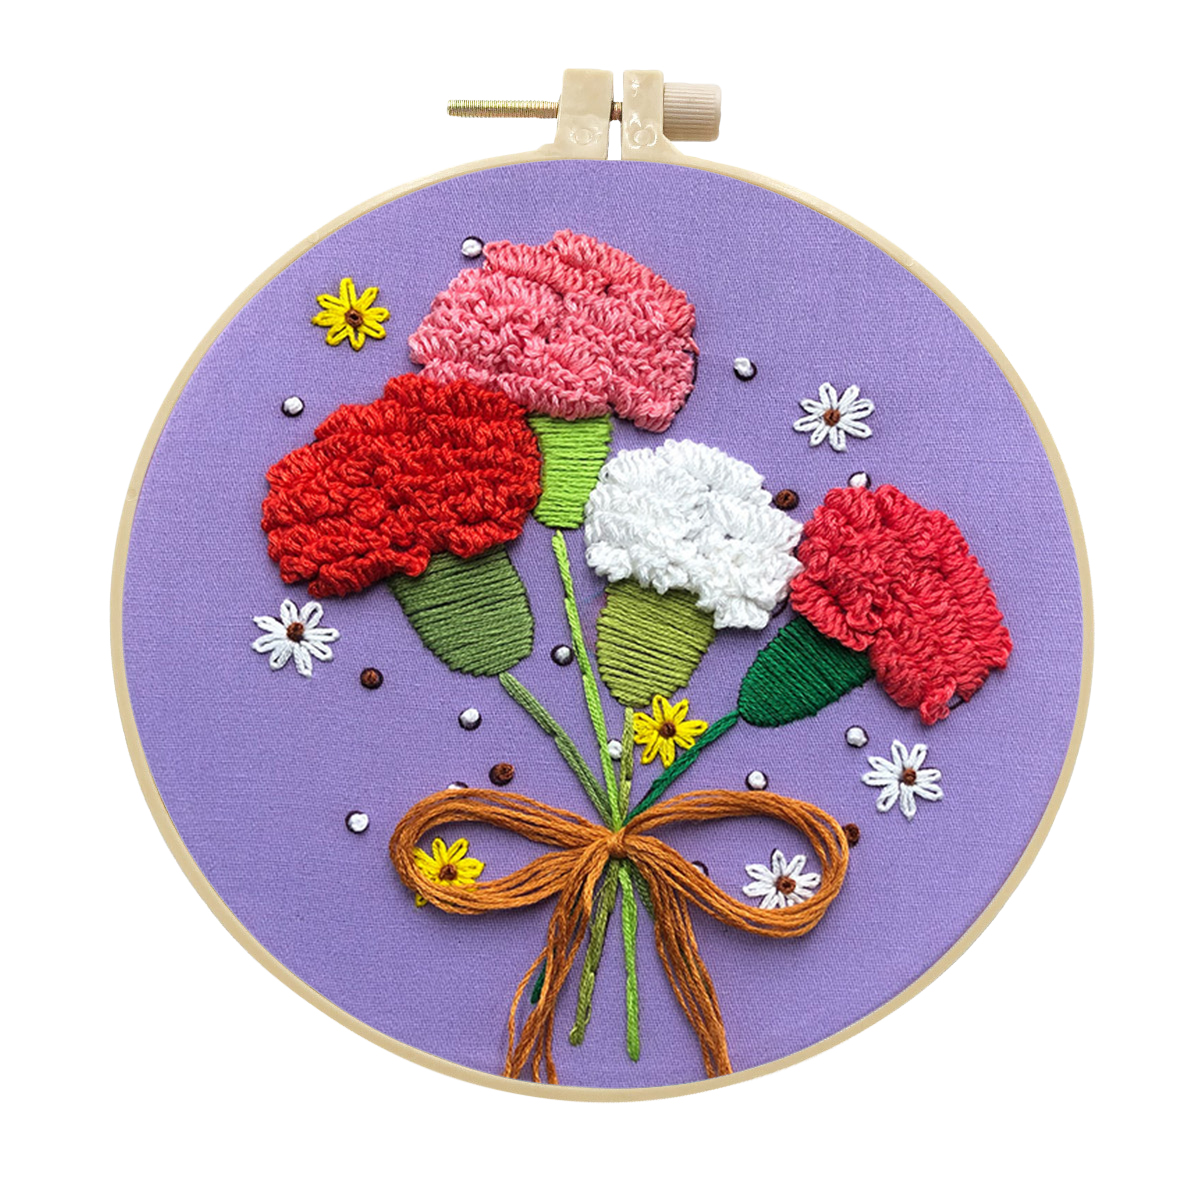 DIY Handmade Embroidery Kit Craft Cross Stitch Kits Beginner - Four blooming flowers Pattern